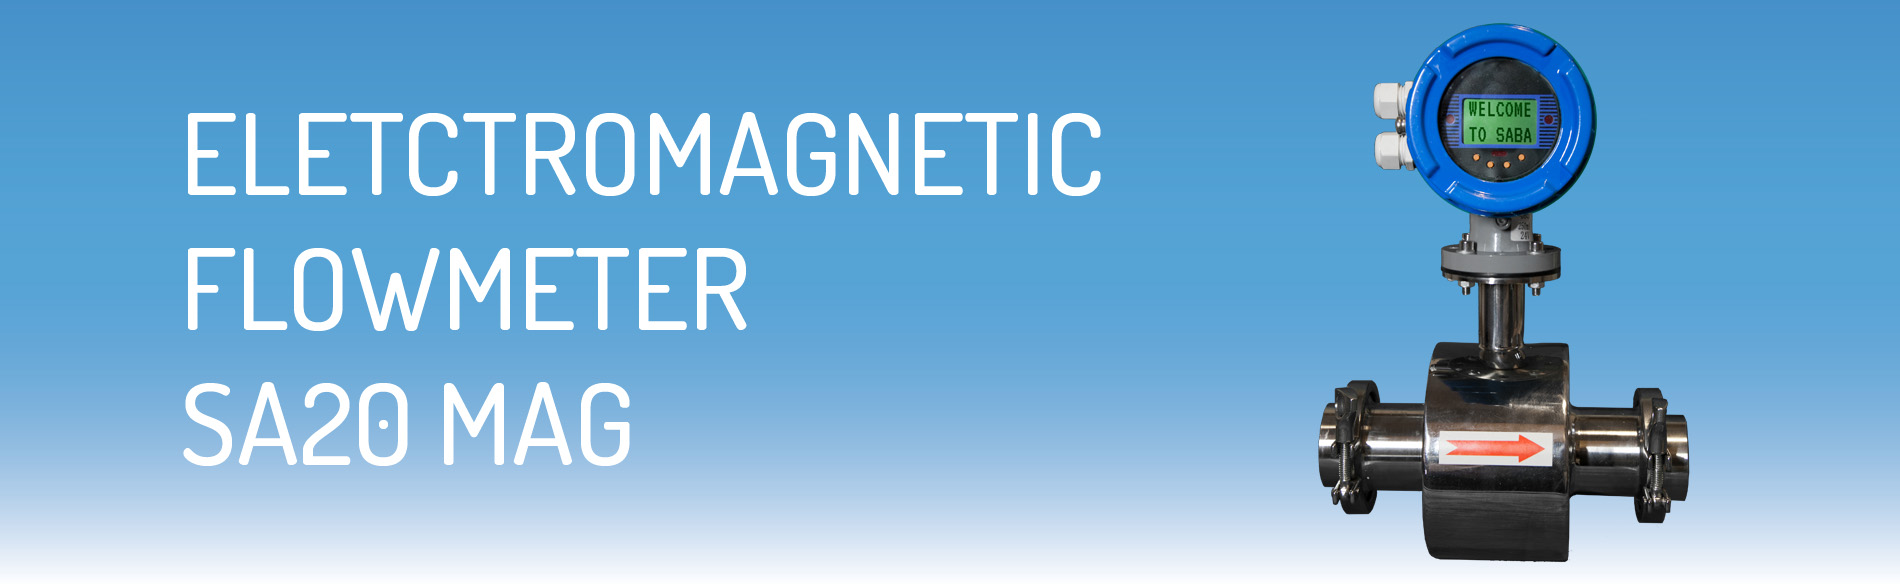 Electromagnetic flowmeter